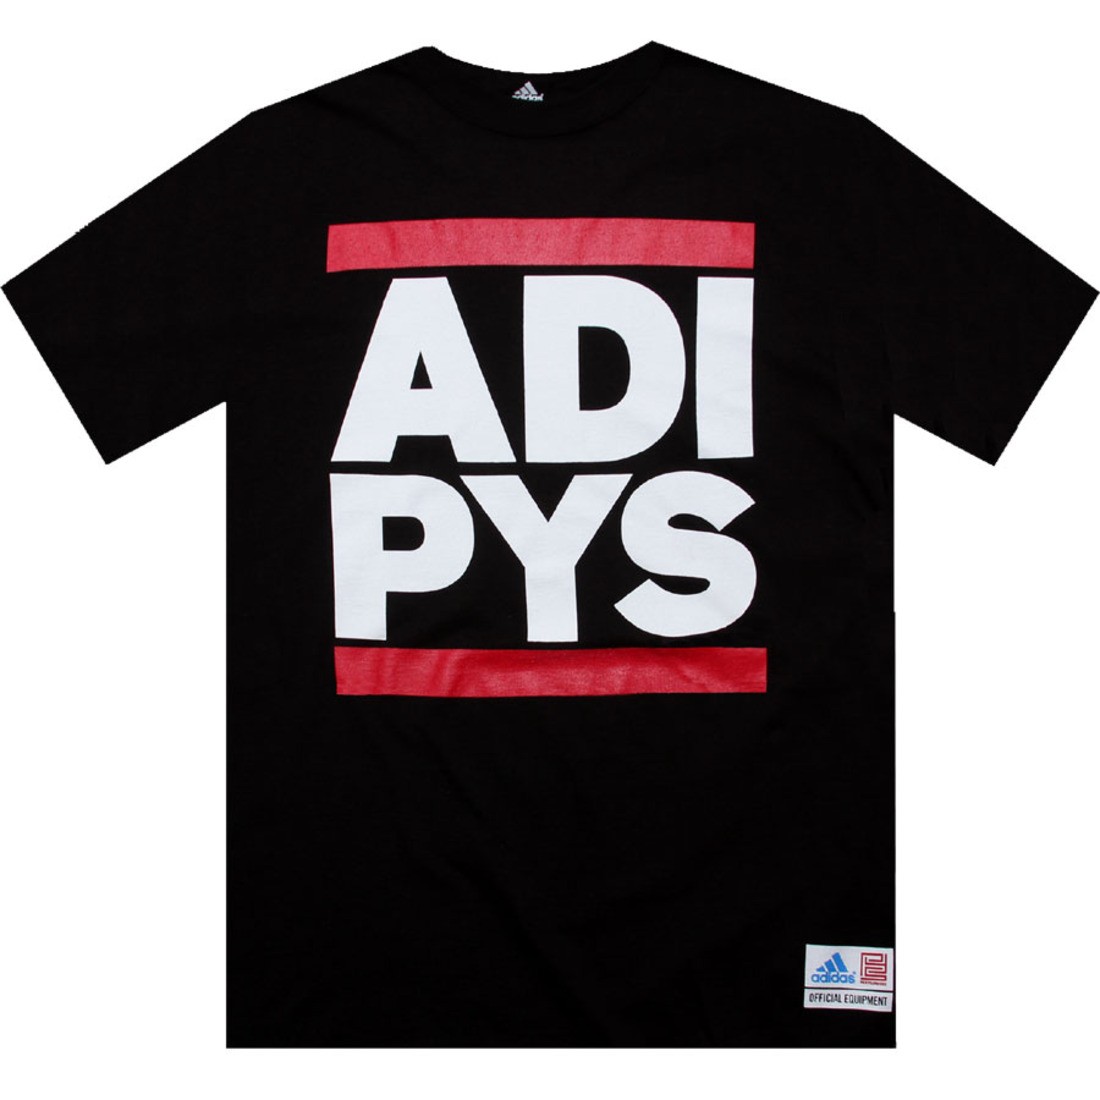 Adidas Adi PYS Tee Run DMC style (black) shirt